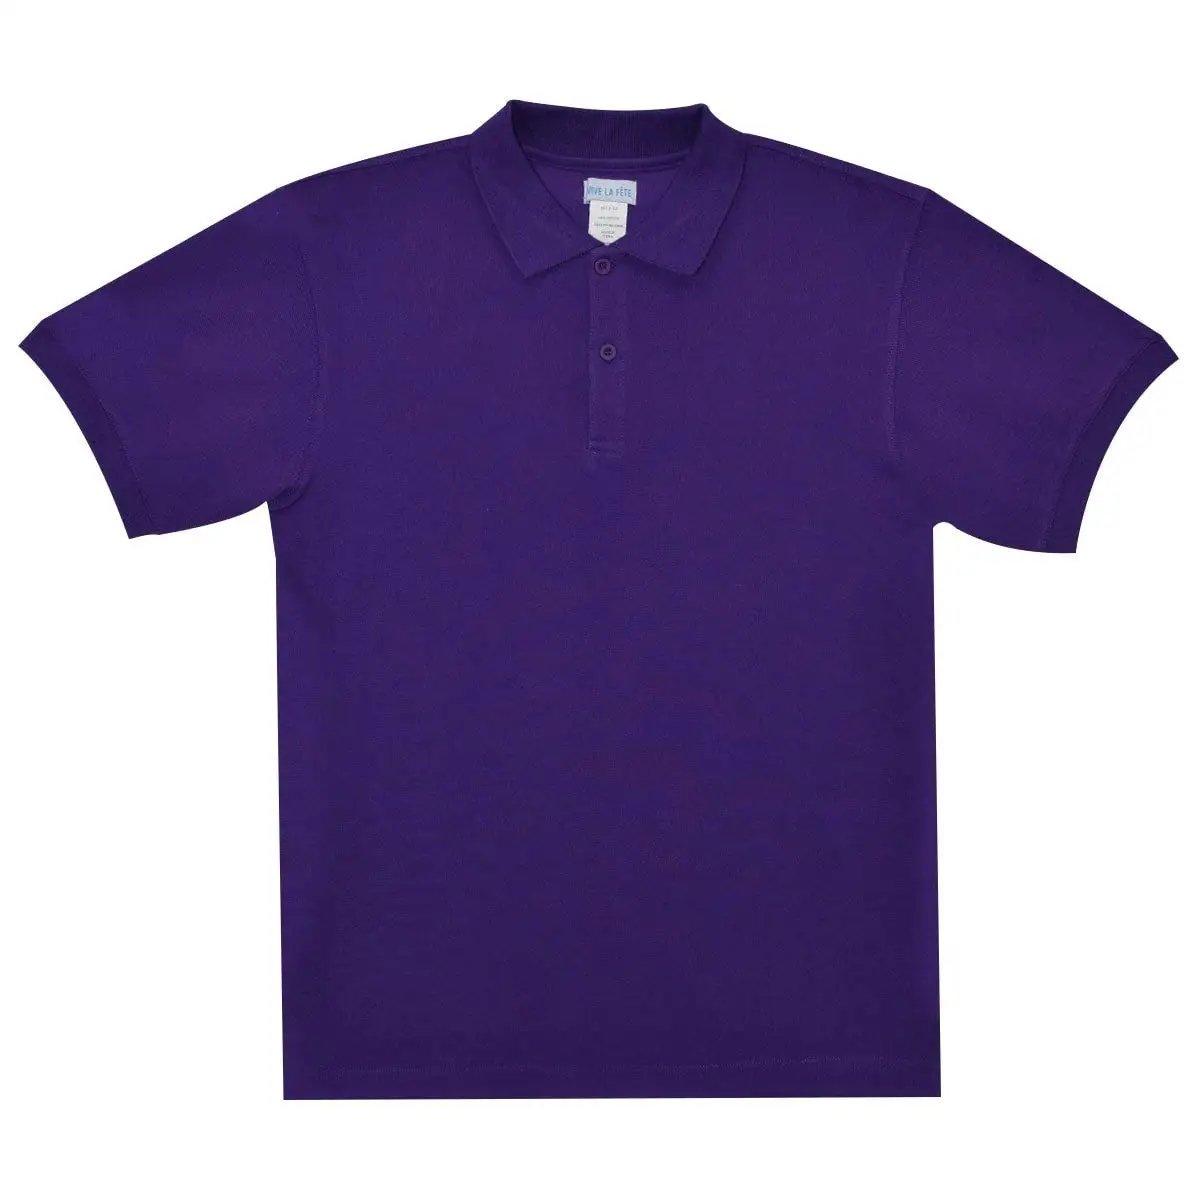 Cheap Royal Purple Polo Shirt, find Royal Purple Polo Shirt deals on ...